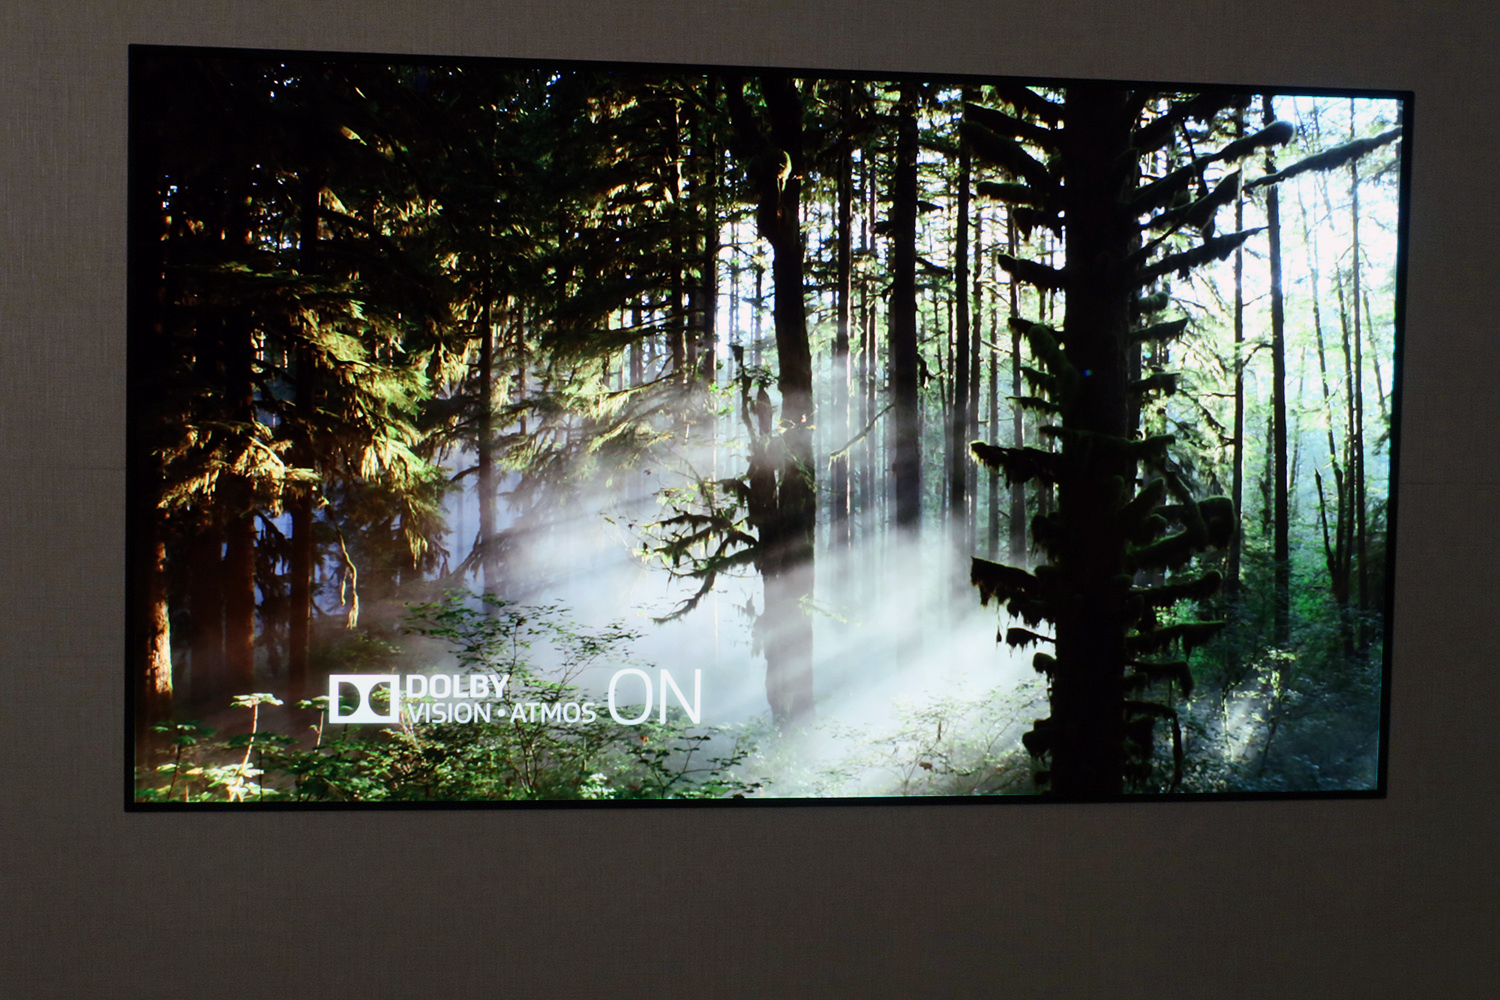 LG Signature OLED65W7P W7 Wallpaper OLED TV Review | Digital Trends